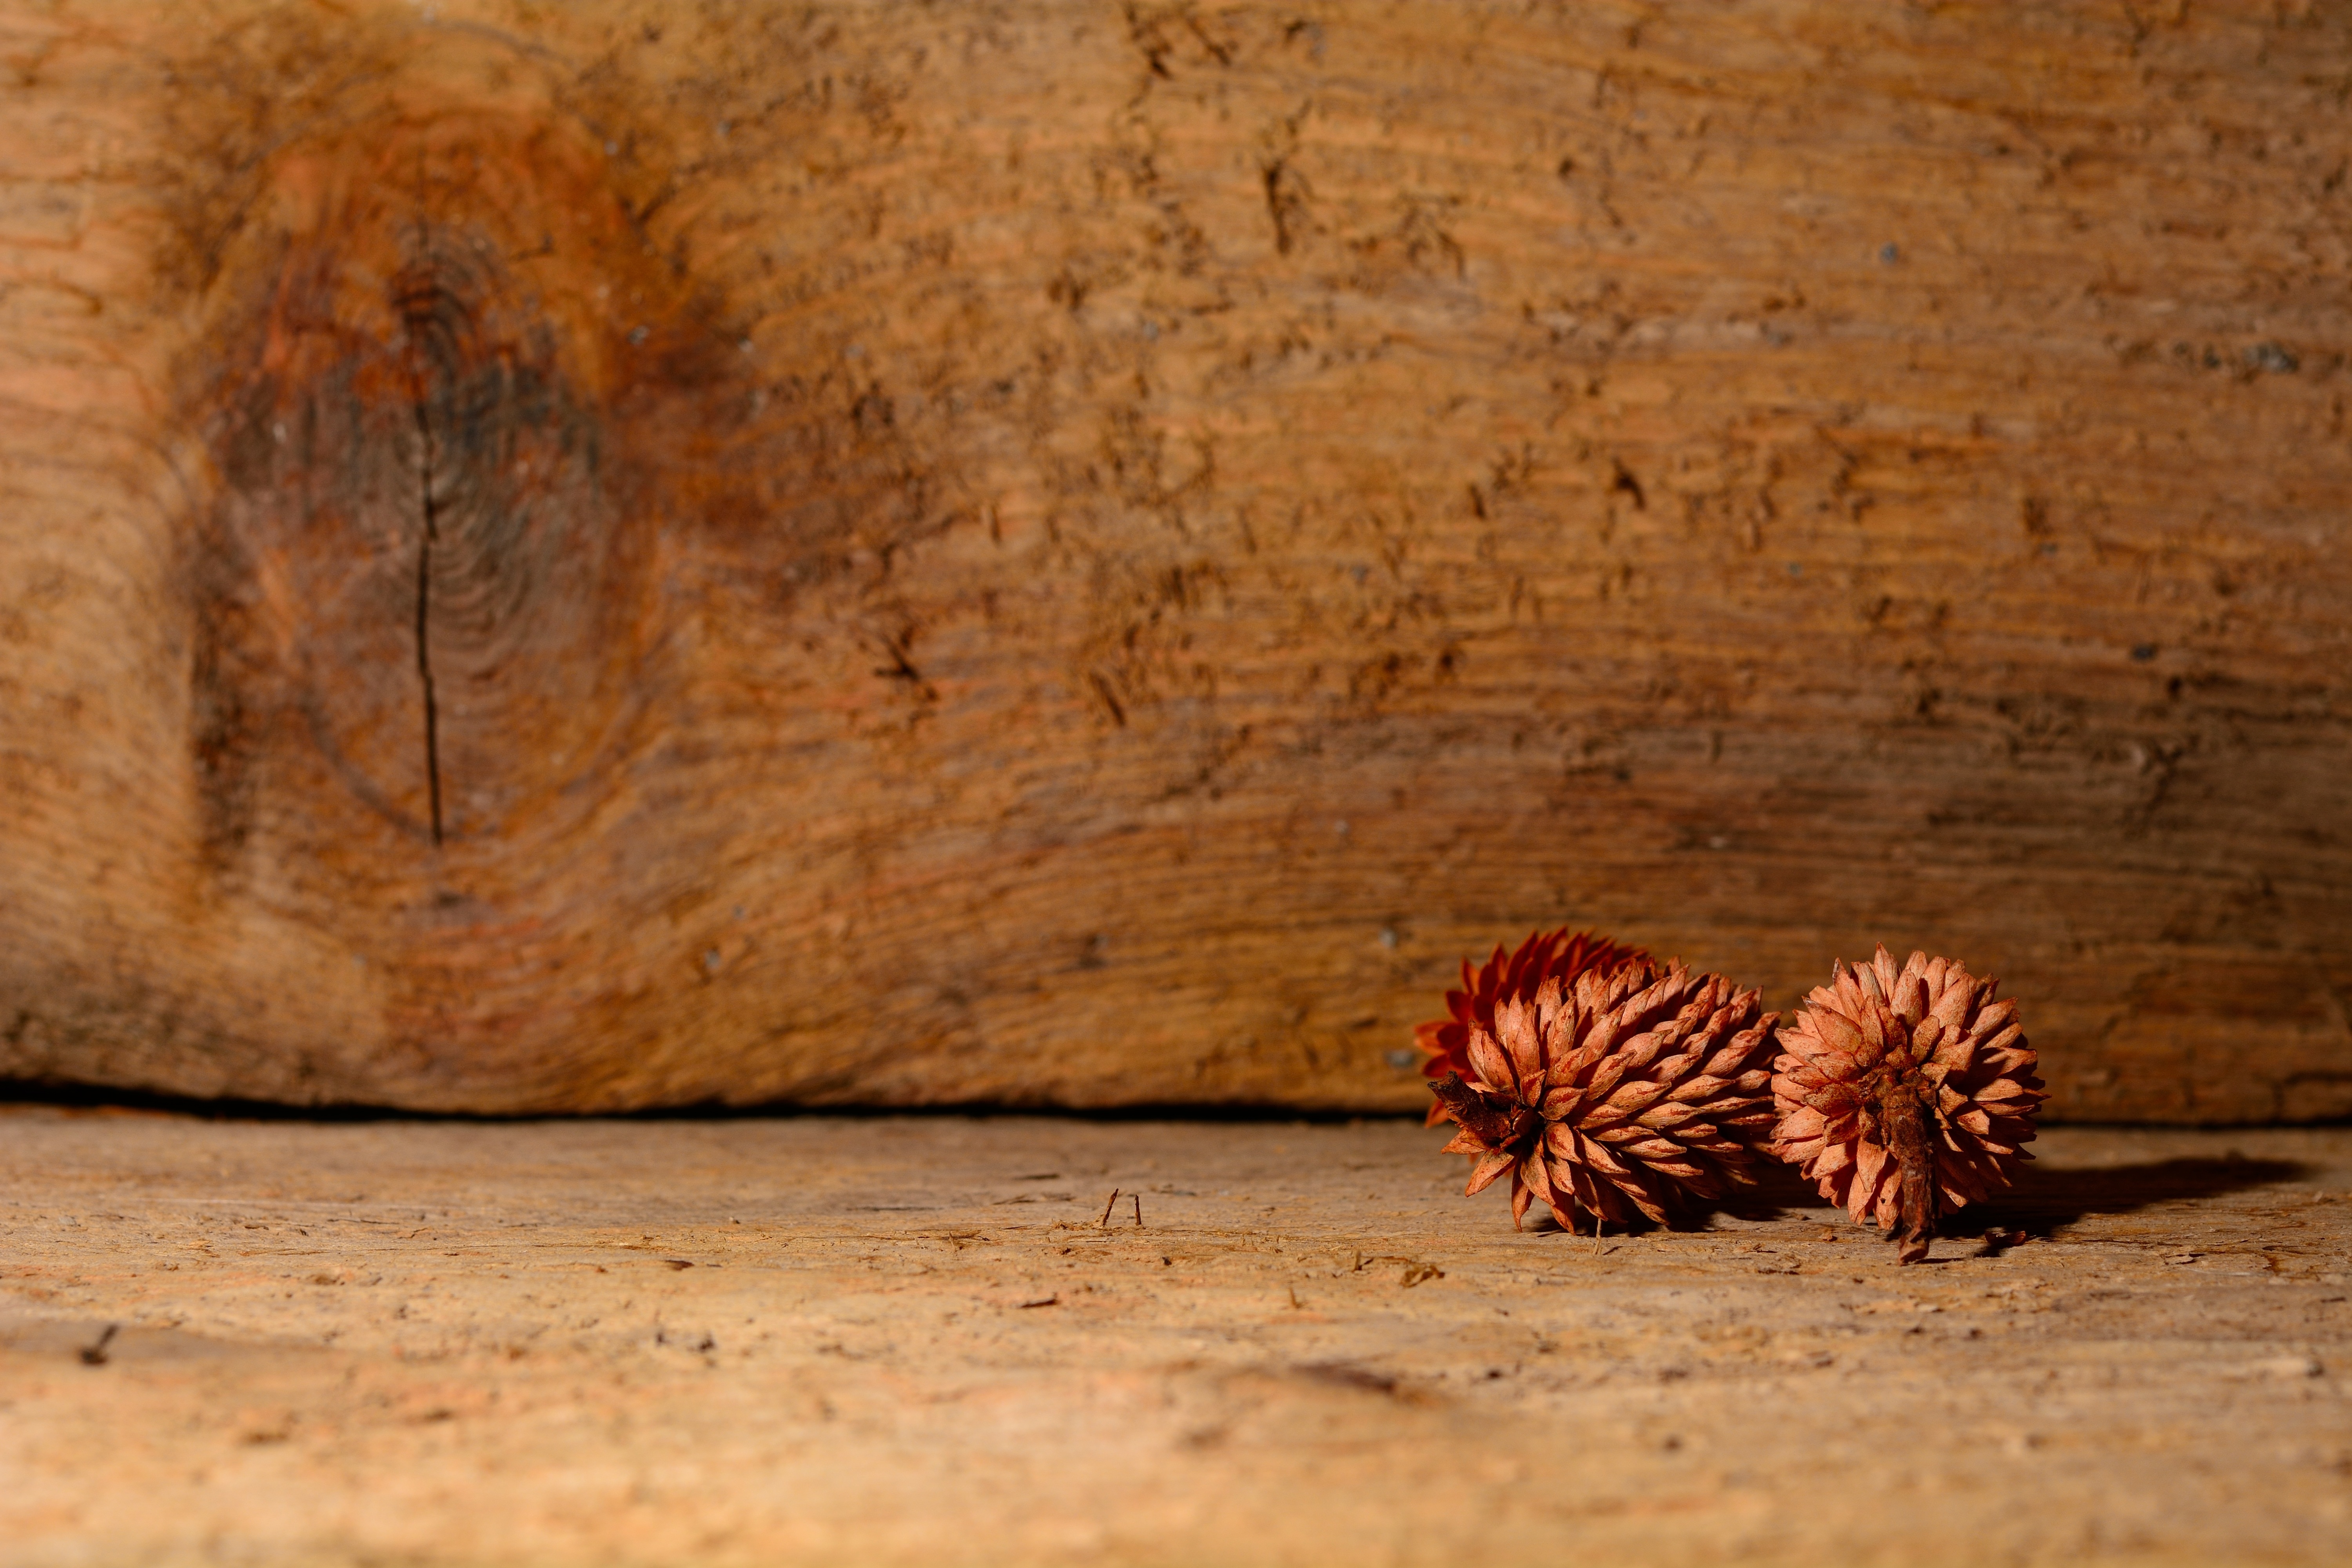 2 brown pine cones